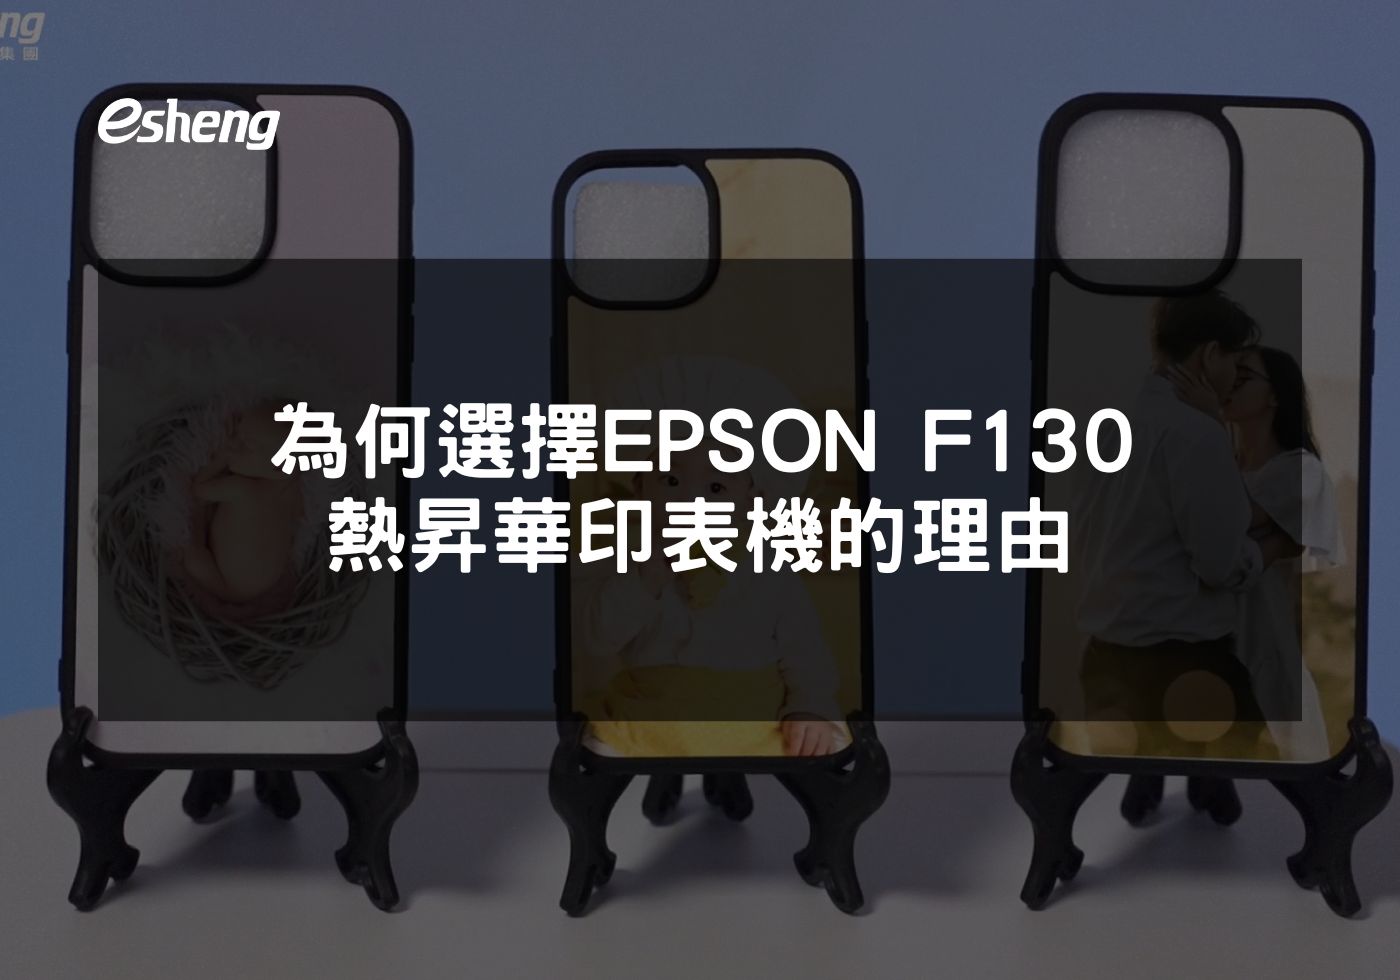 EPSON F130 熱昇華印表機完全指南 小型企業的最佳選擇